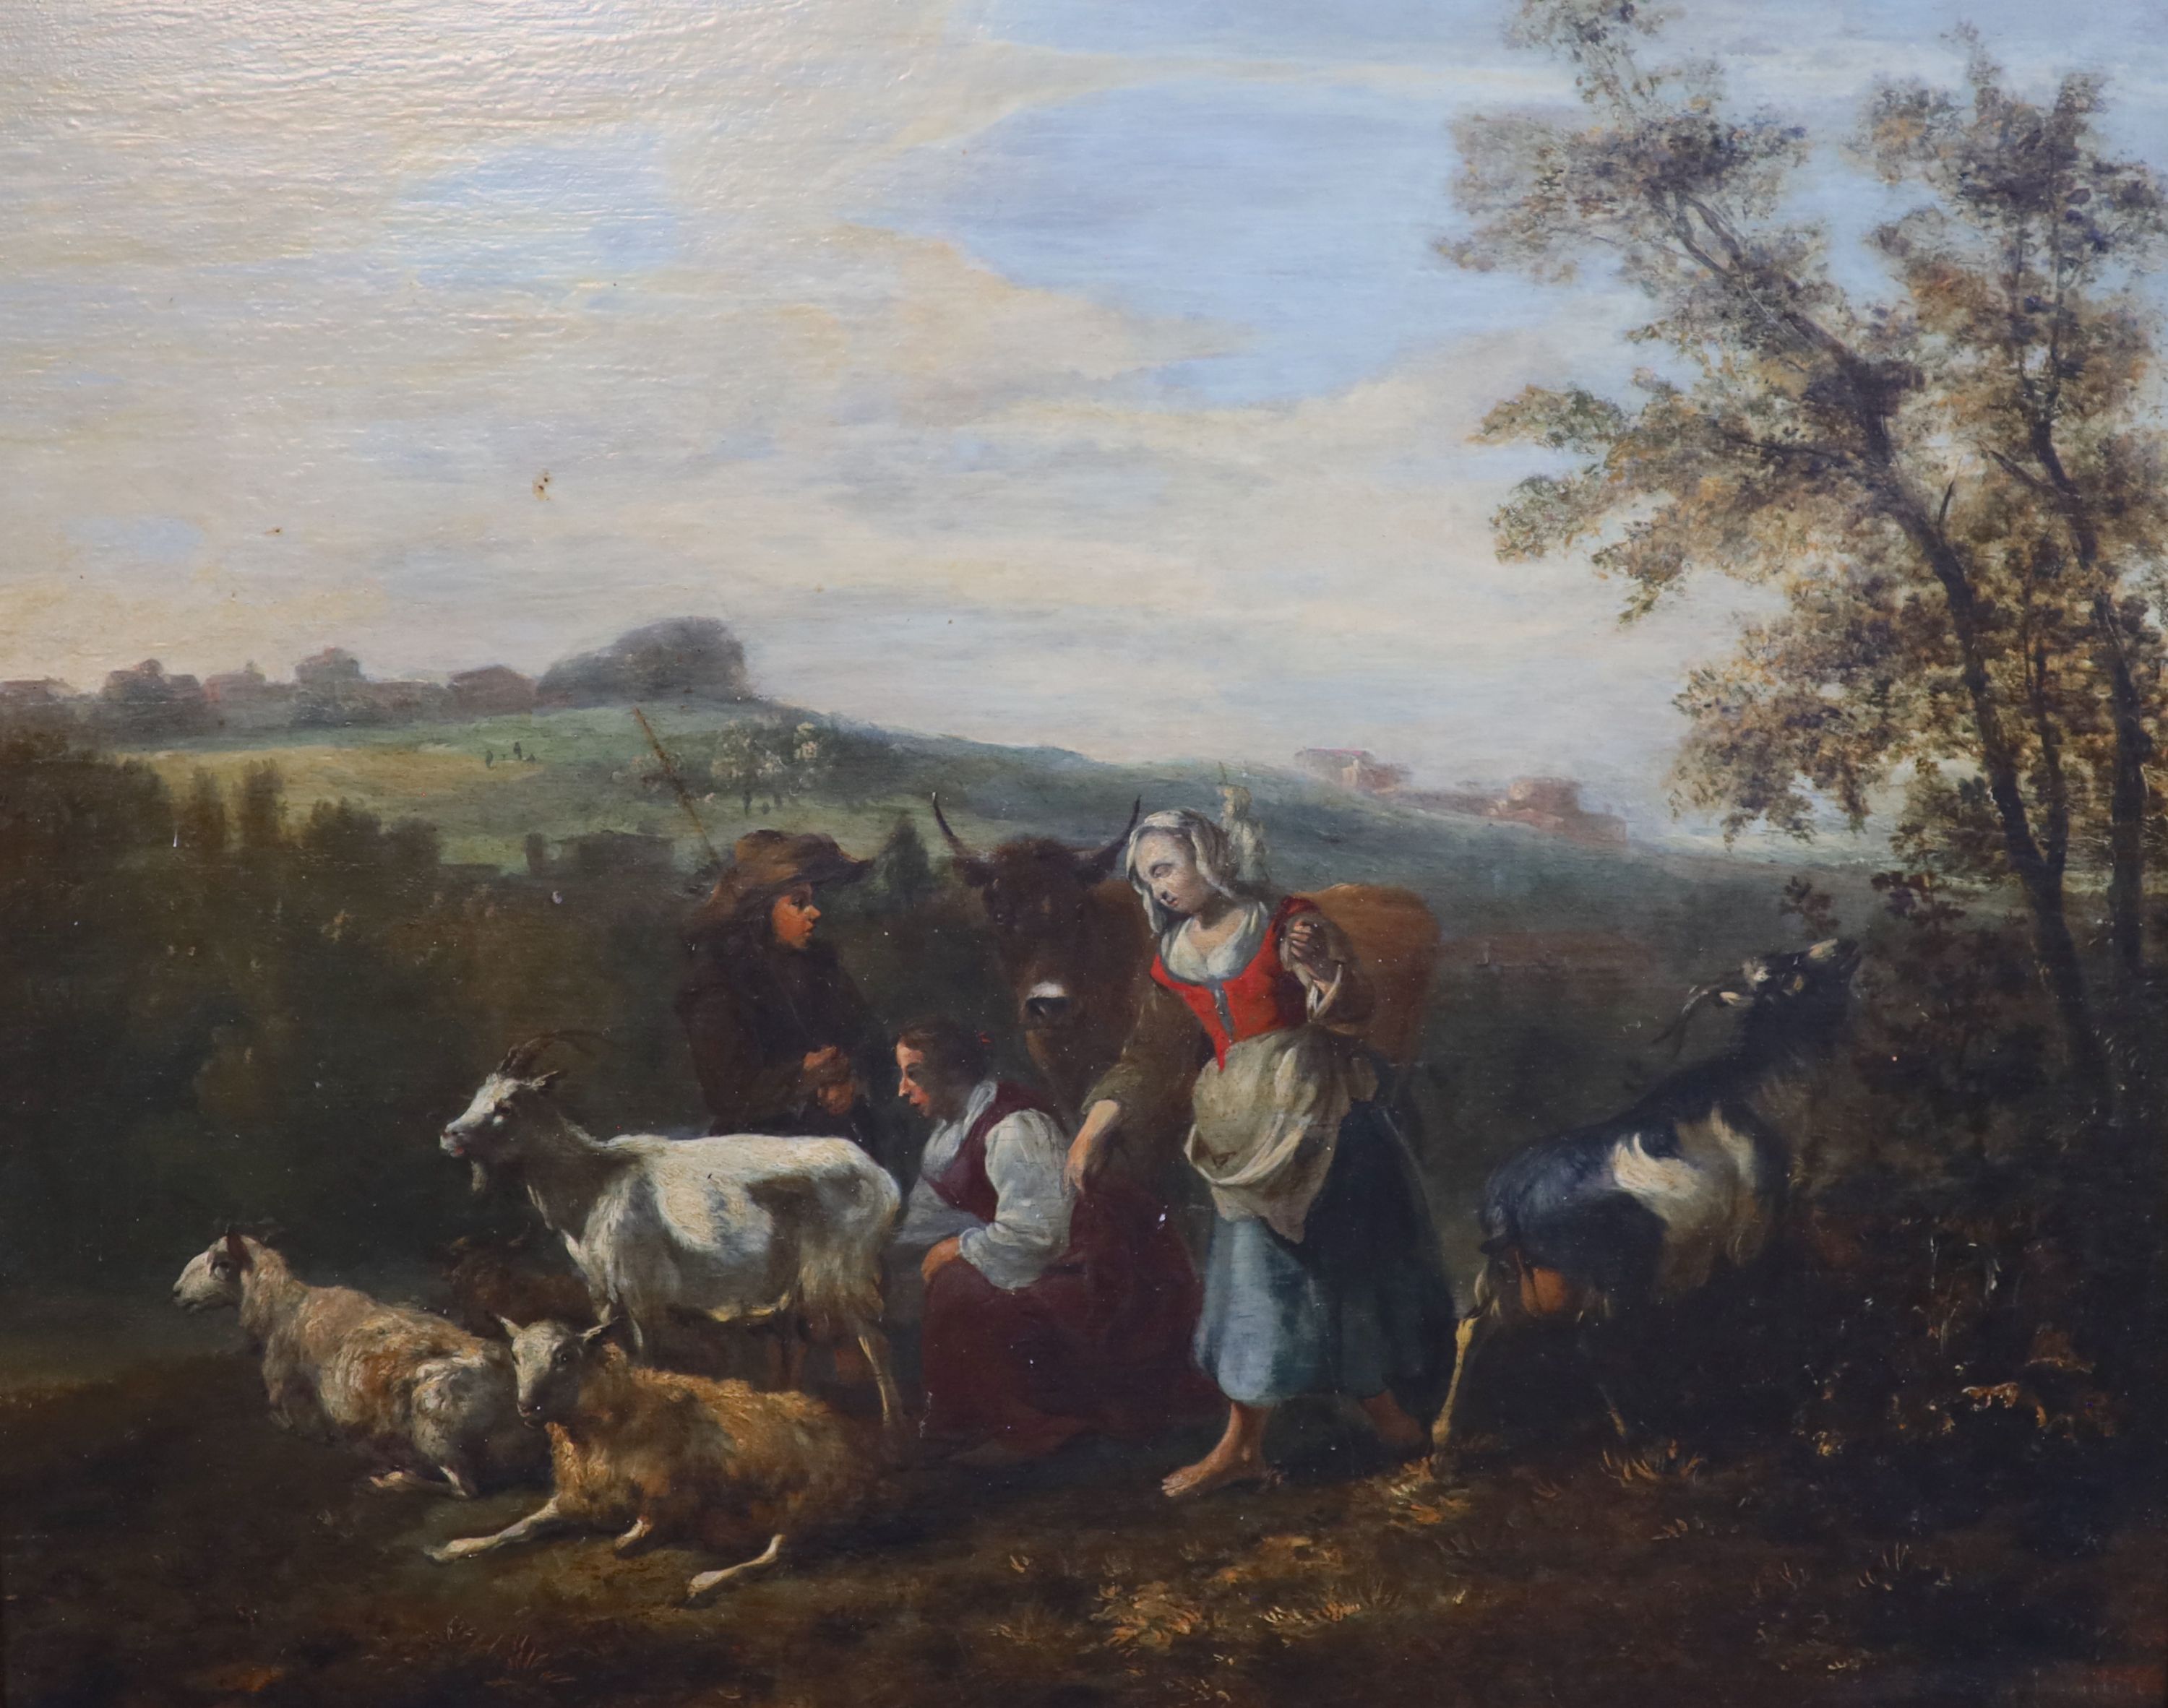 Late 18th century Flemish School, Shepherdess in a landscape